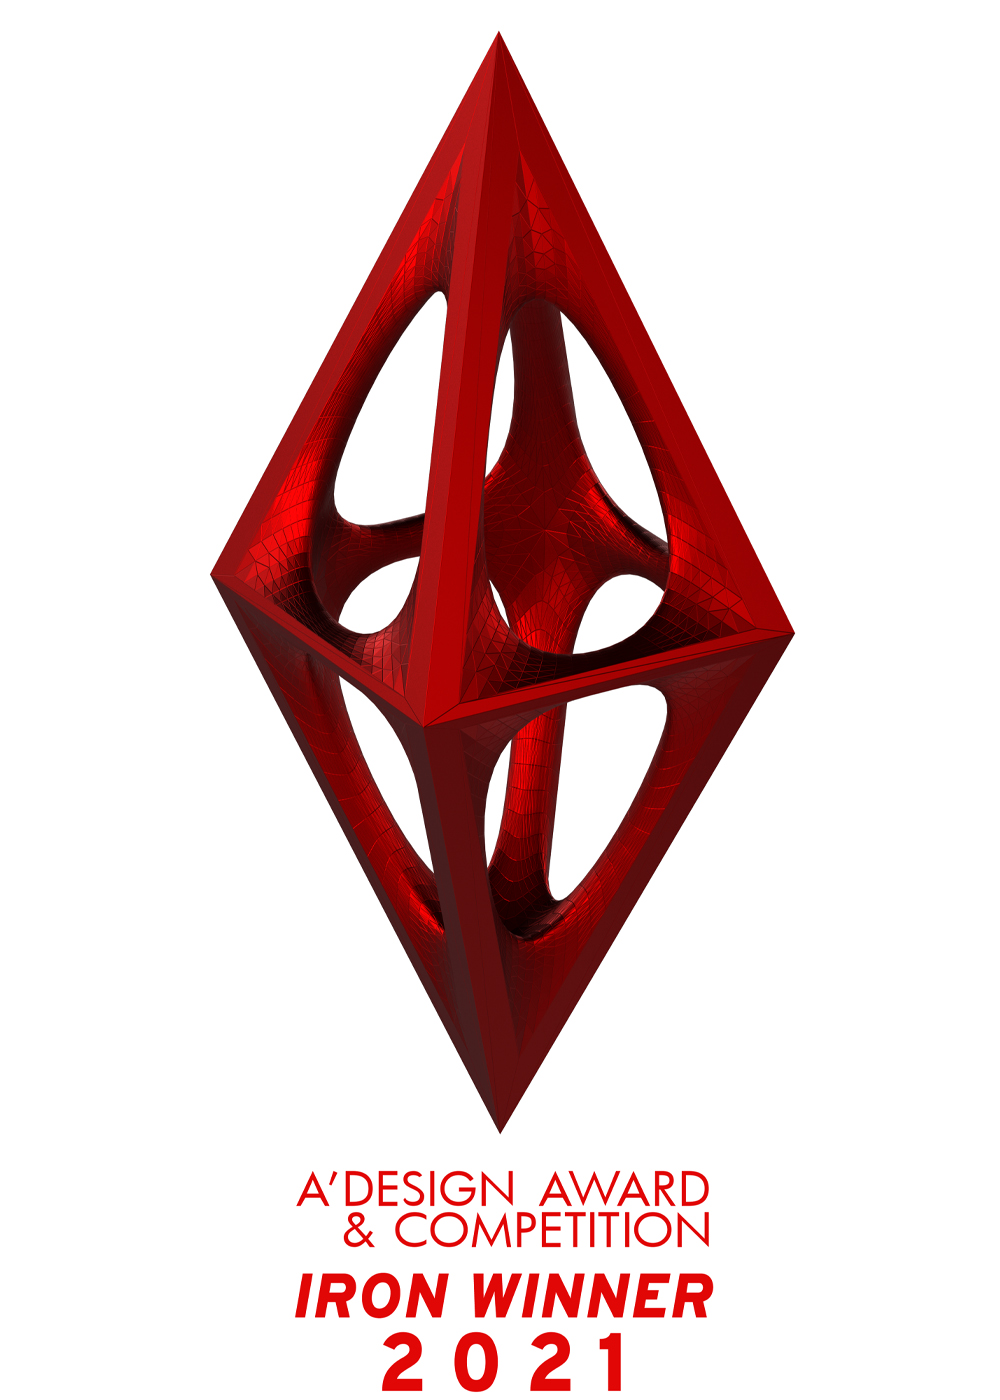 Iron winner at A design award 2021